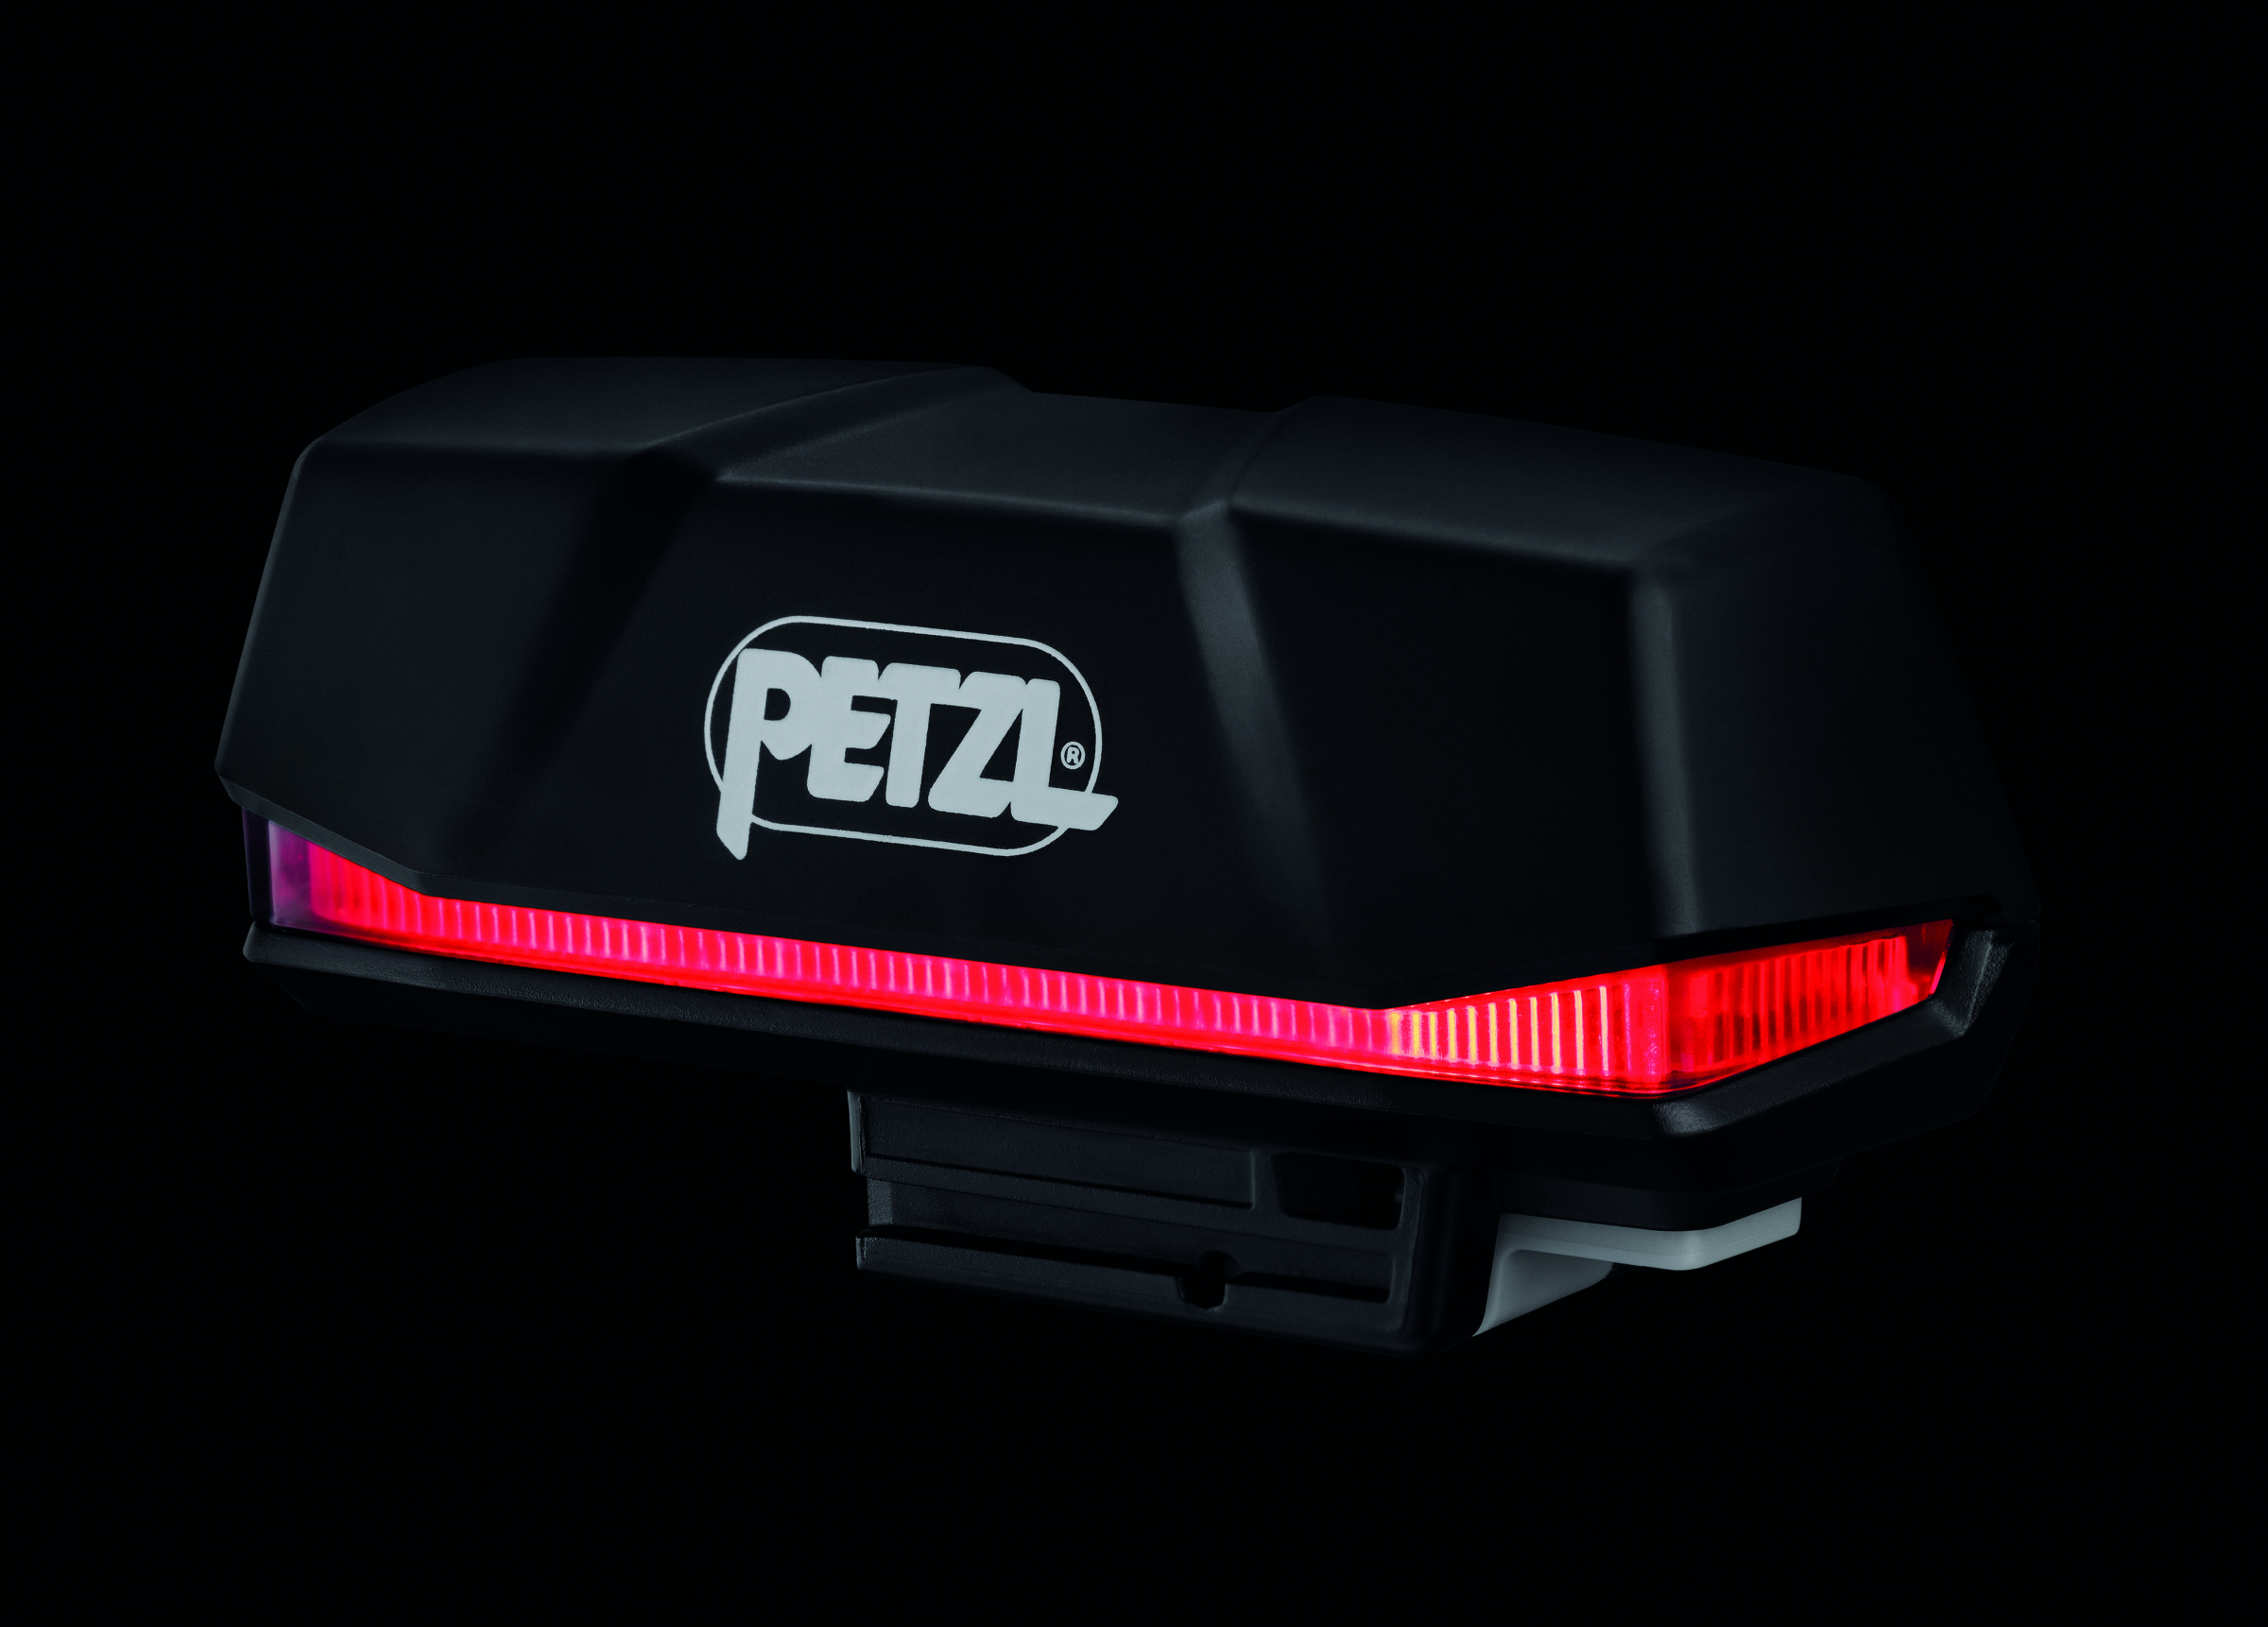 Petzl NAO RL rechargeable headlamp E105AA00